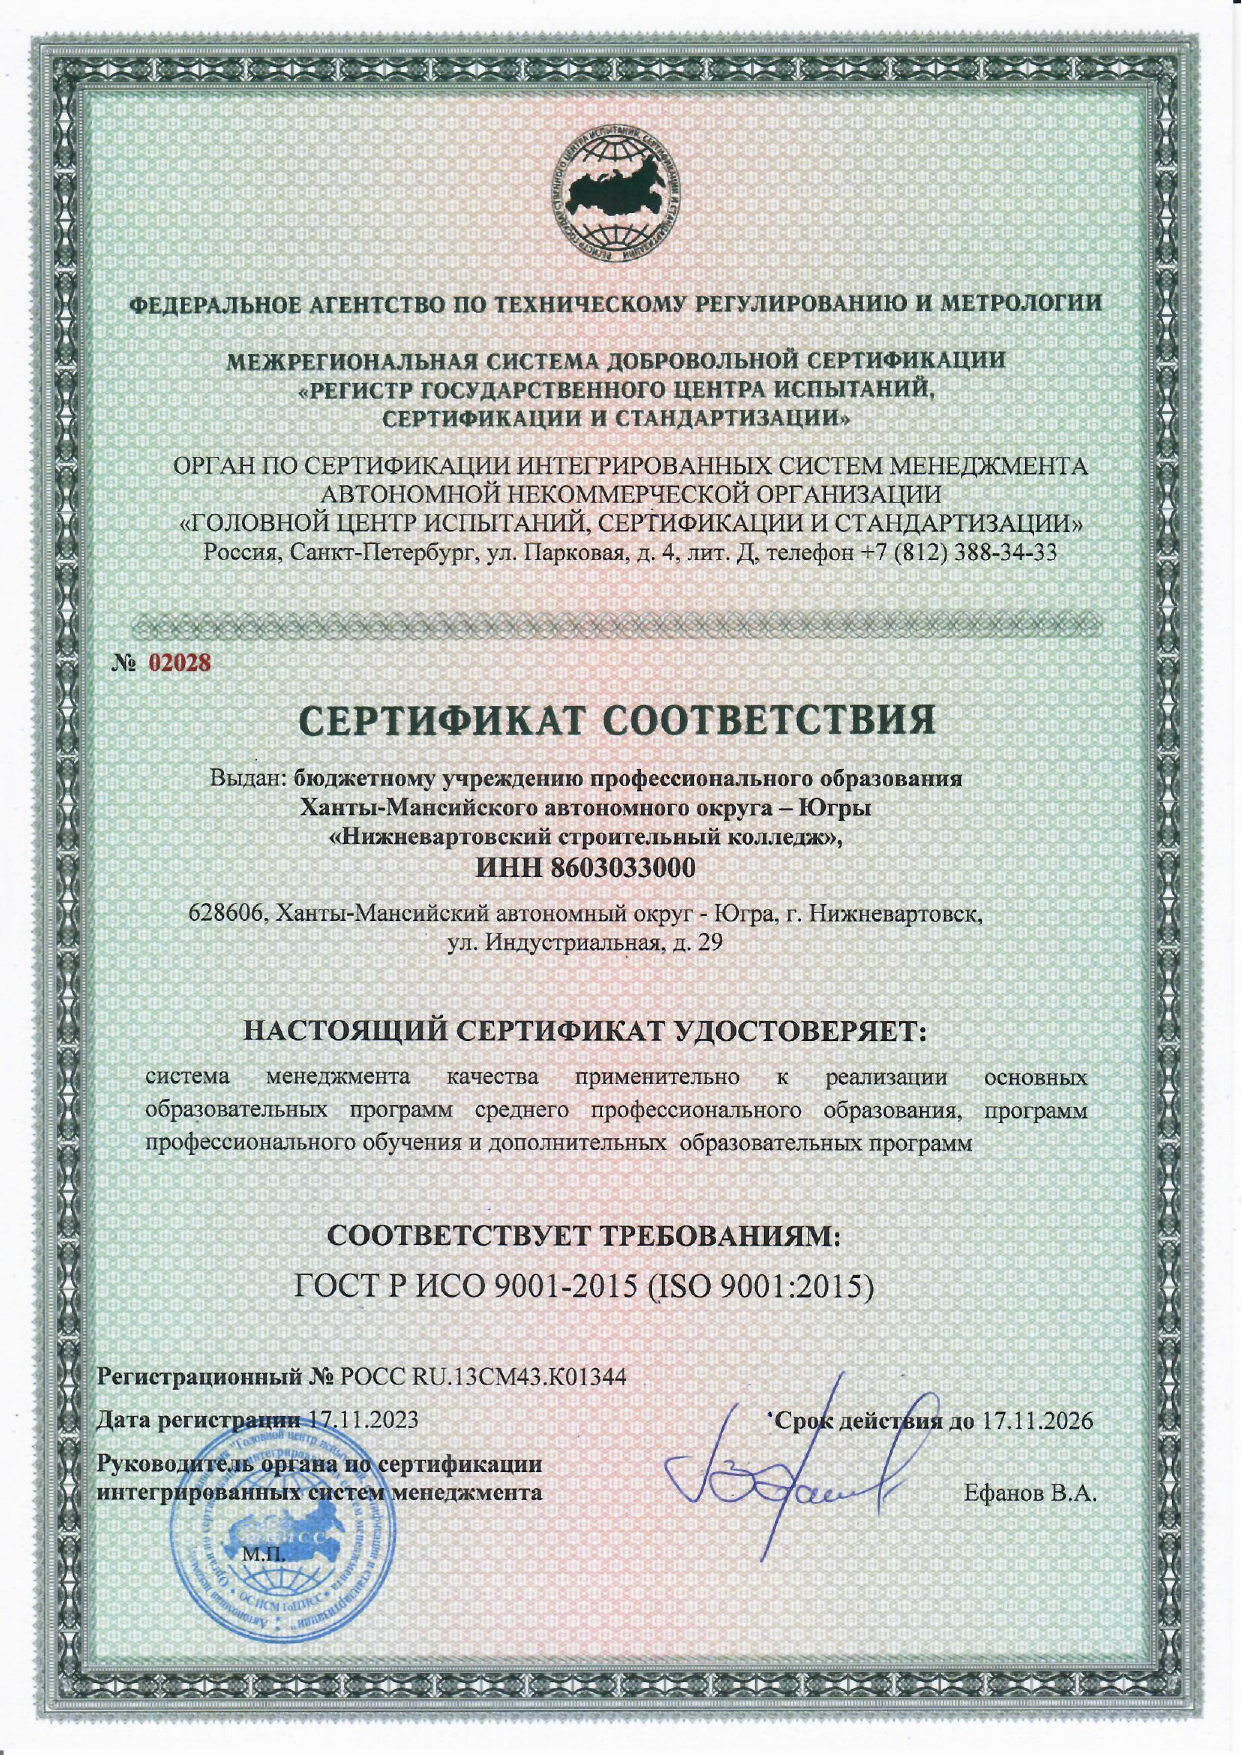 сертификат.png